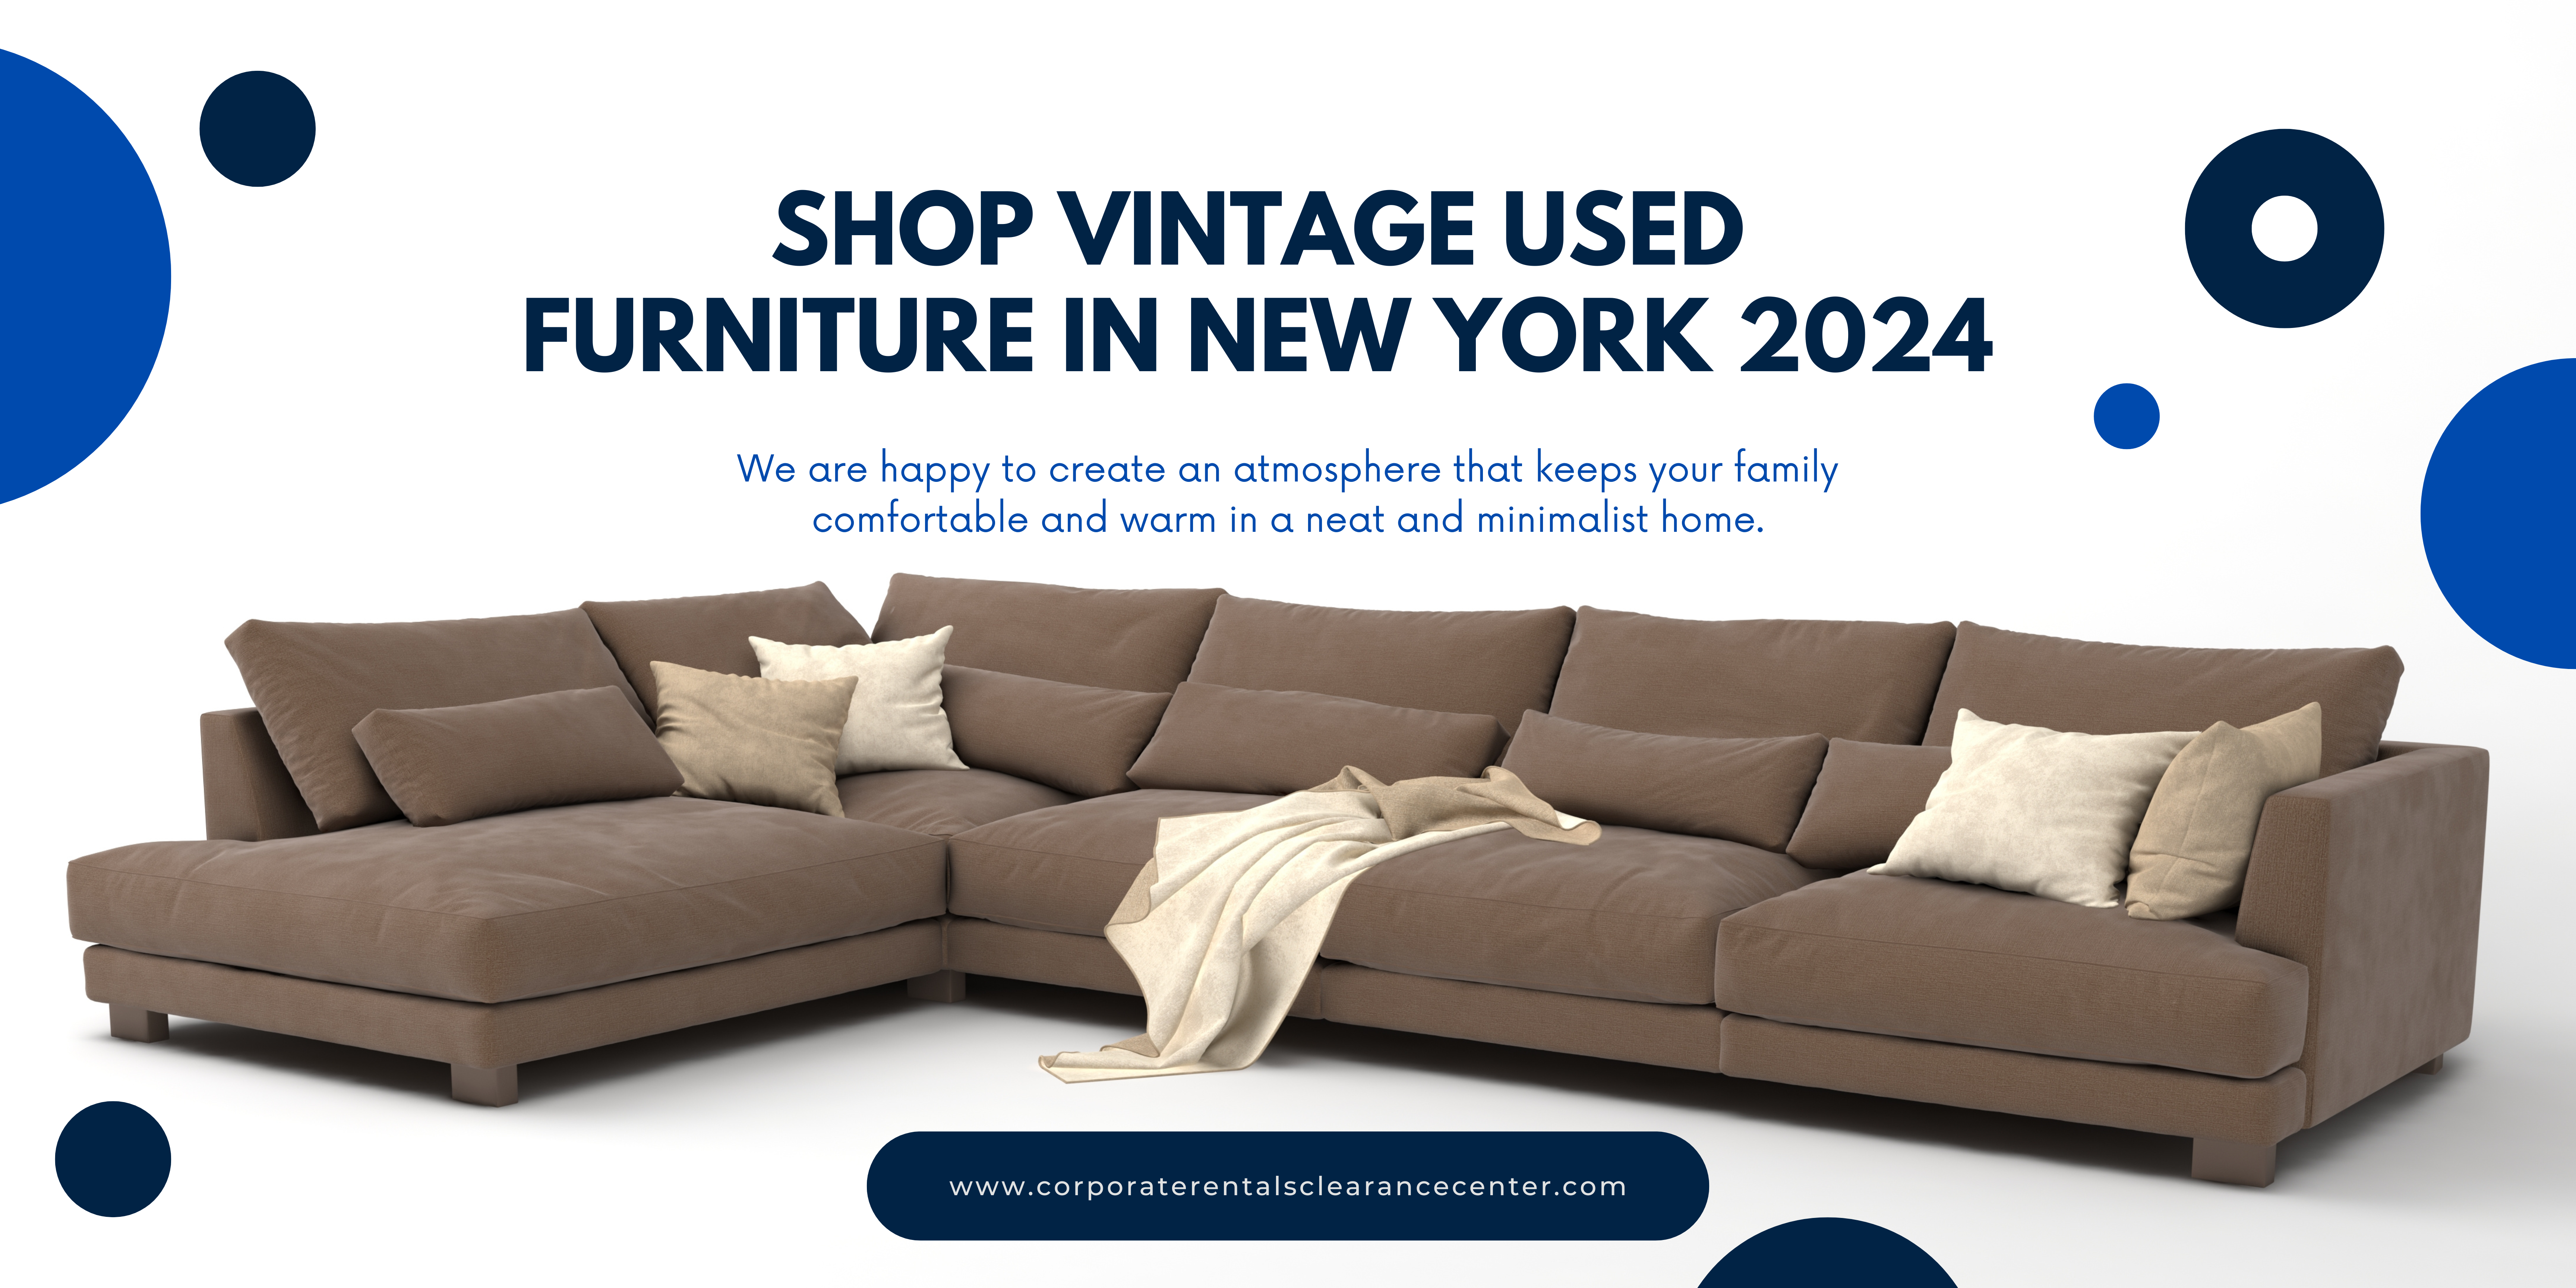 Shop Vintage Used Furniture in New York 2024